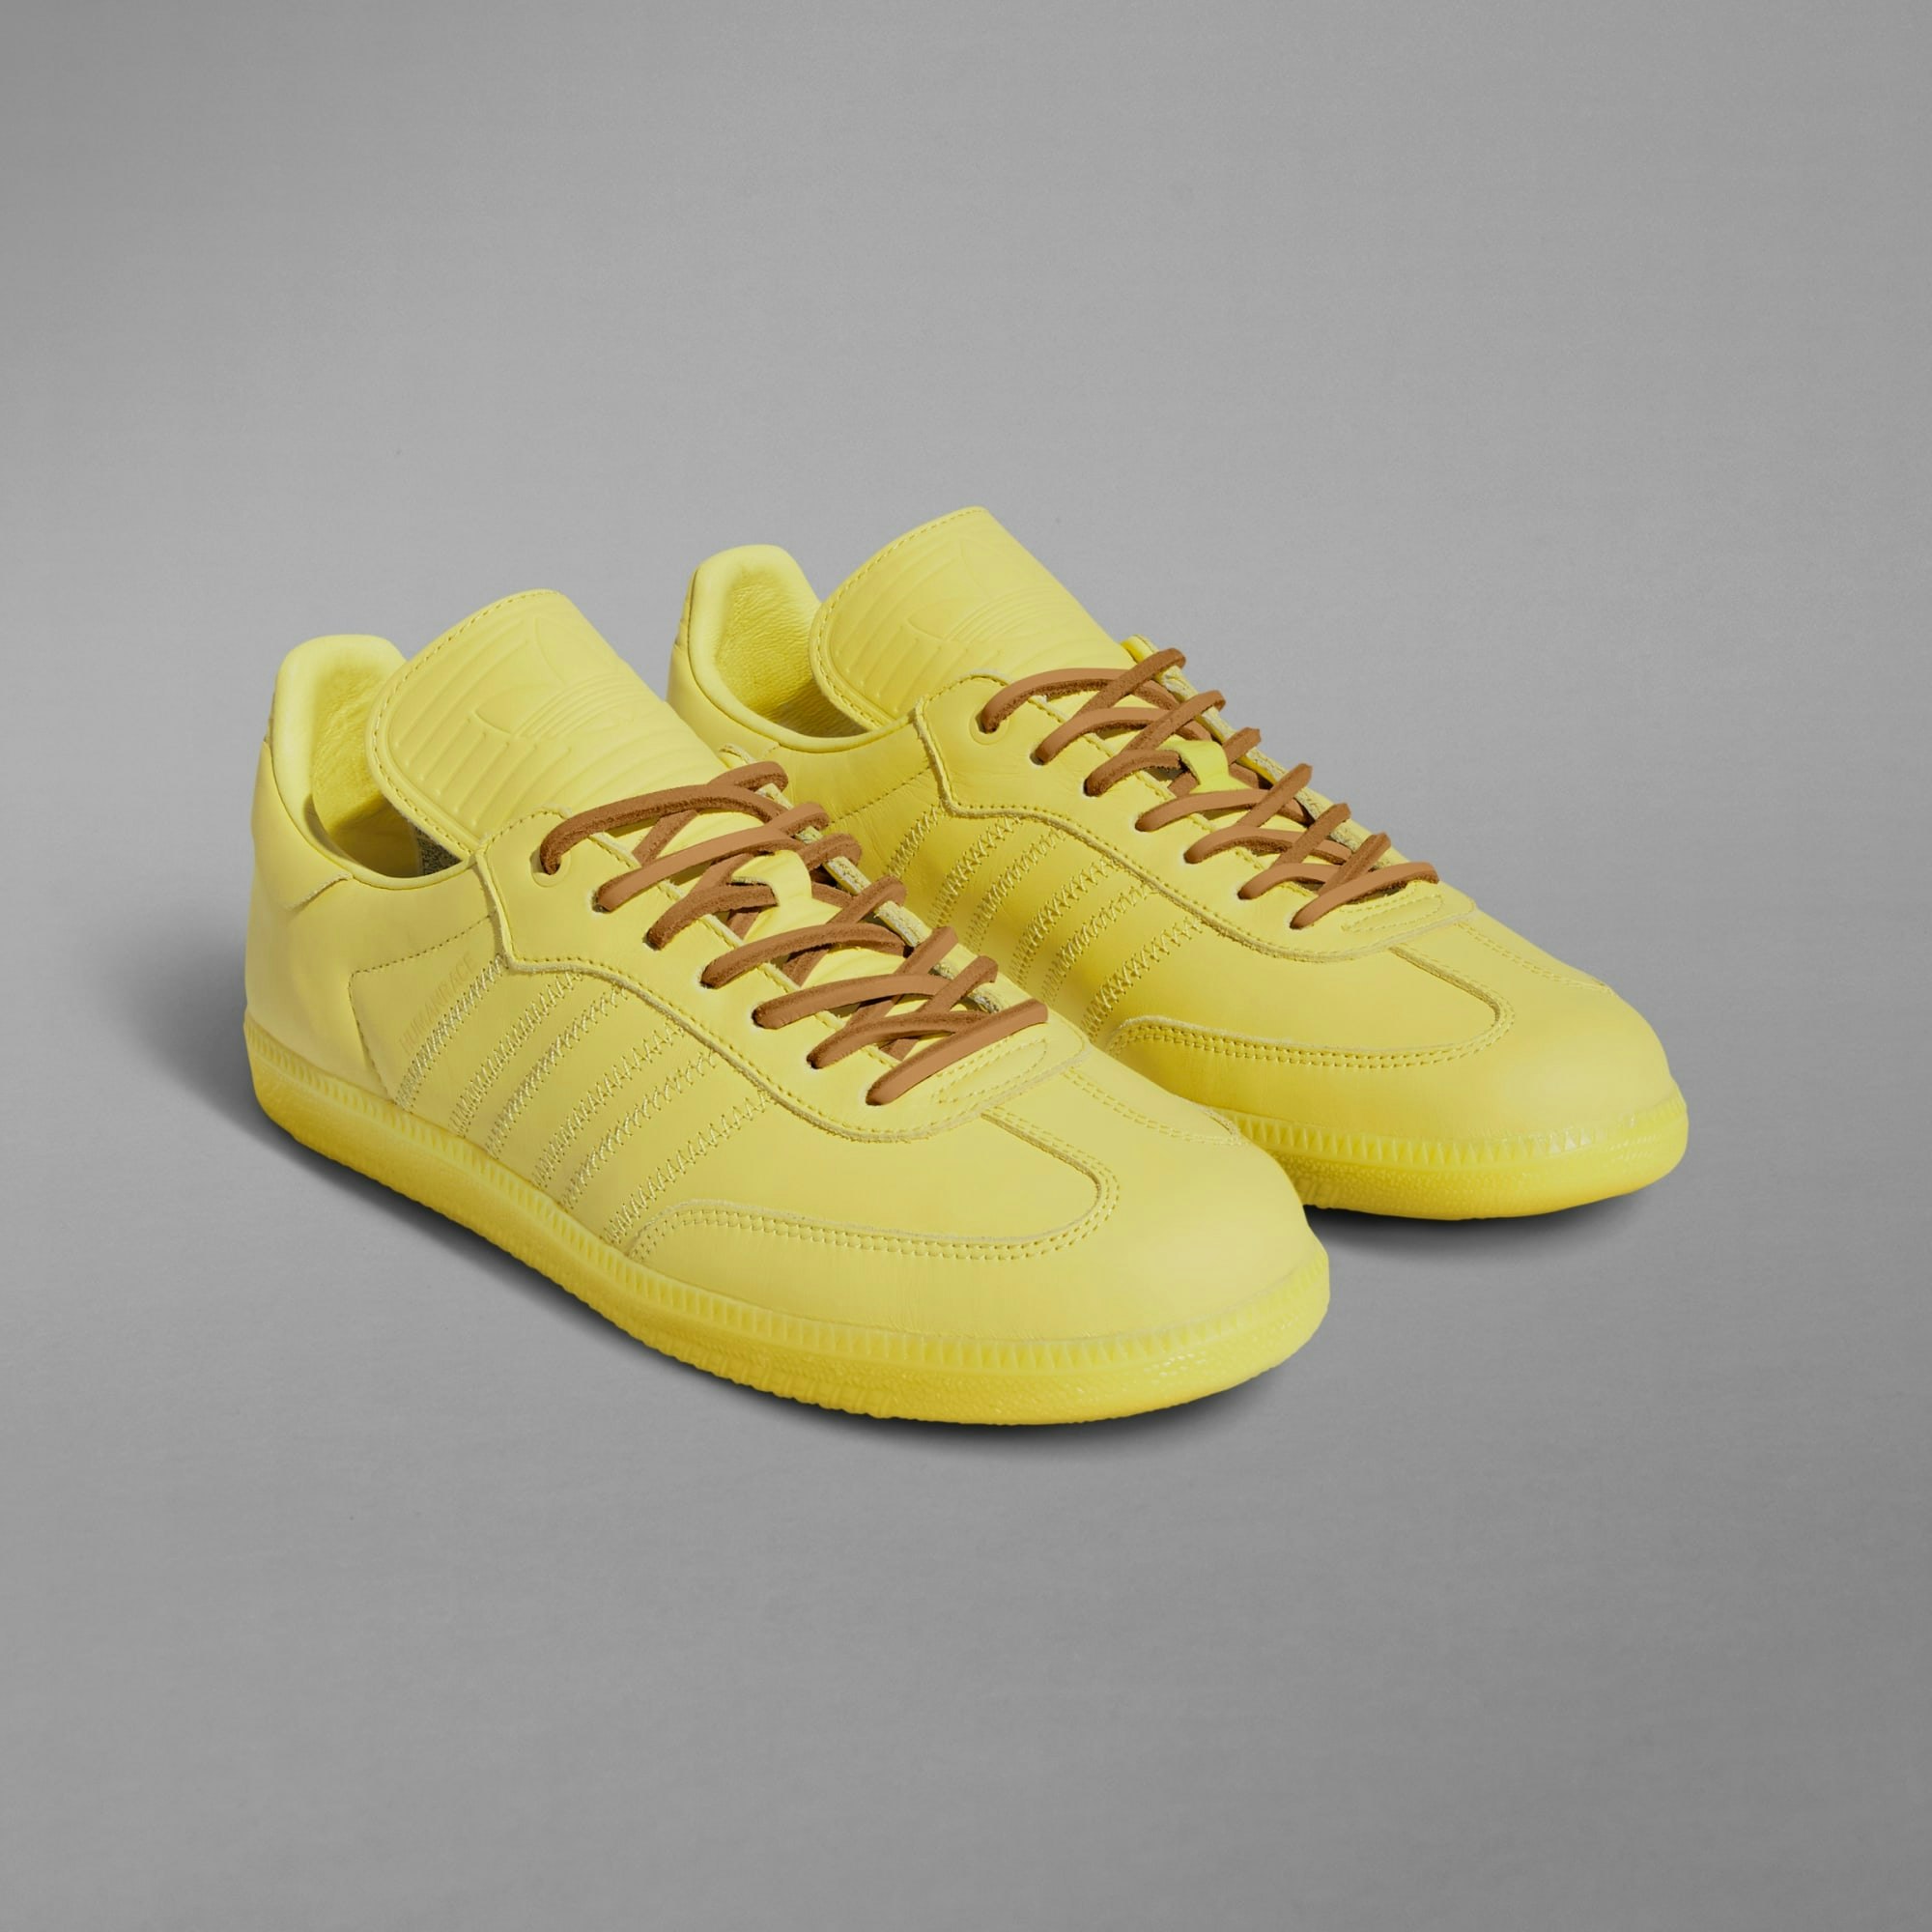 Pharrell Williams x adidas Samba "Humanrace" (Yellow)